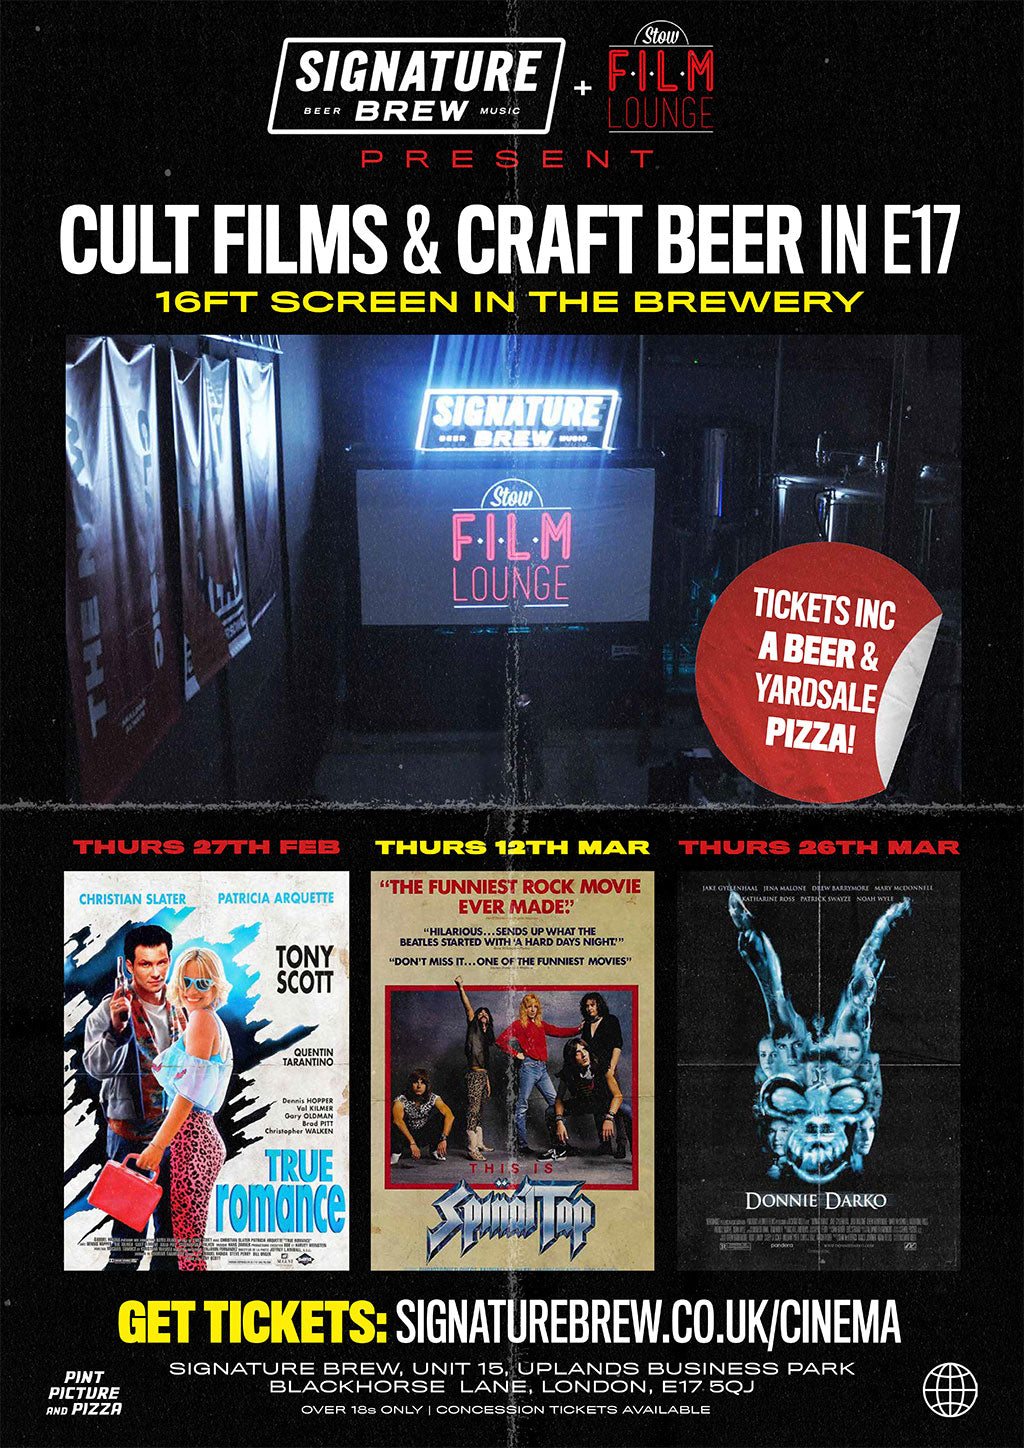 signature brew stow film lounge films movies walthamstow e17 cinema tickets